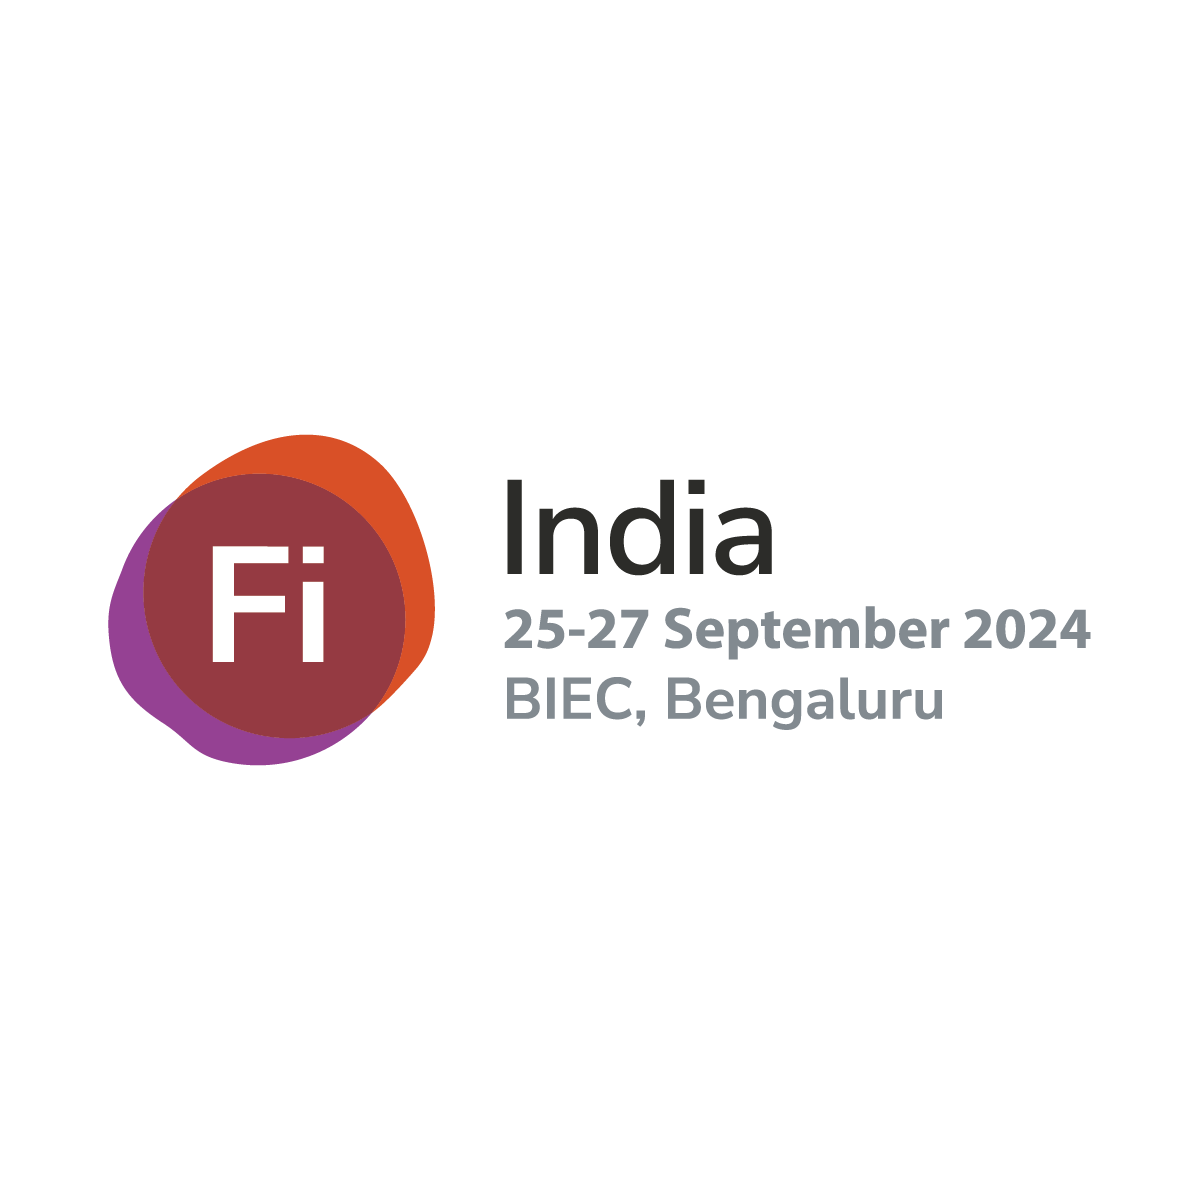 Fi India 2024, Bengaluru, Karnataka, India